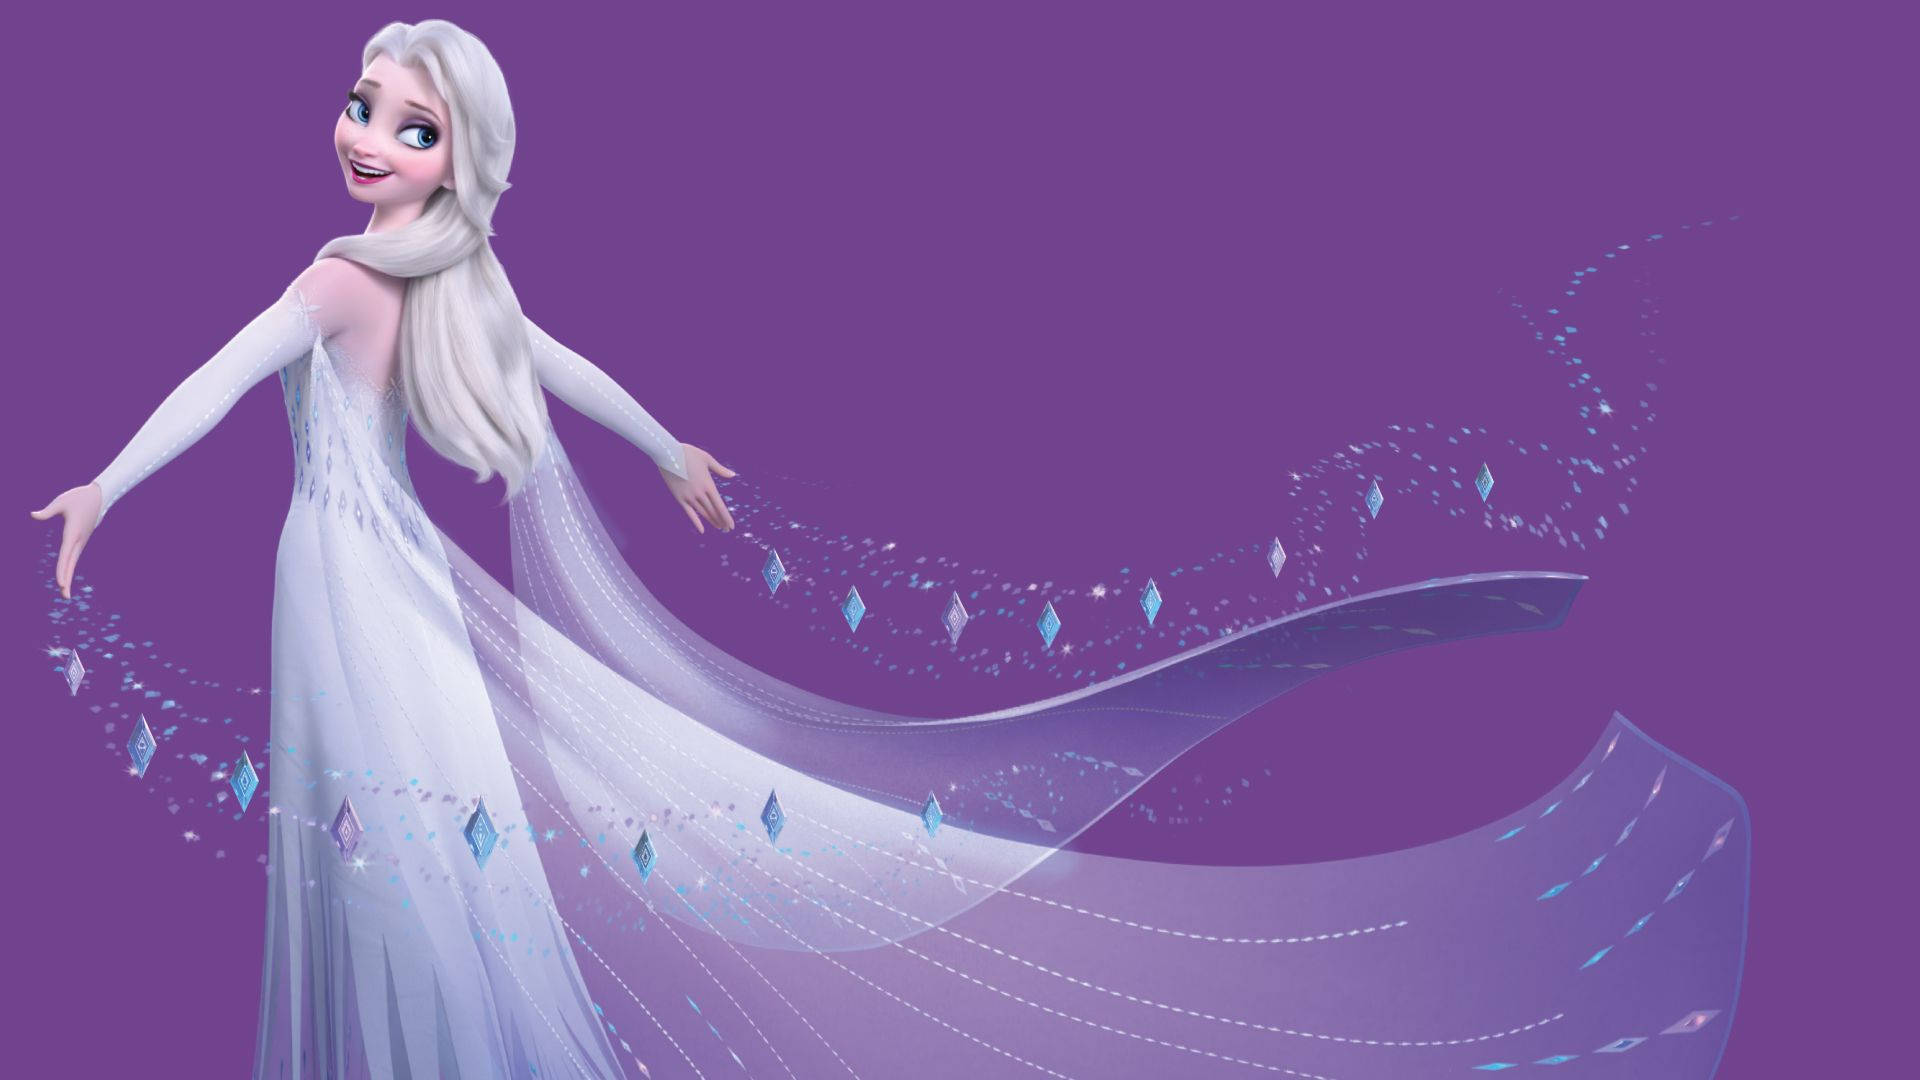 Free Elsa Frozen 2 Wallpaper Downloads, [100+] Elsa Frozen 2 Wallpapers for  FREE 